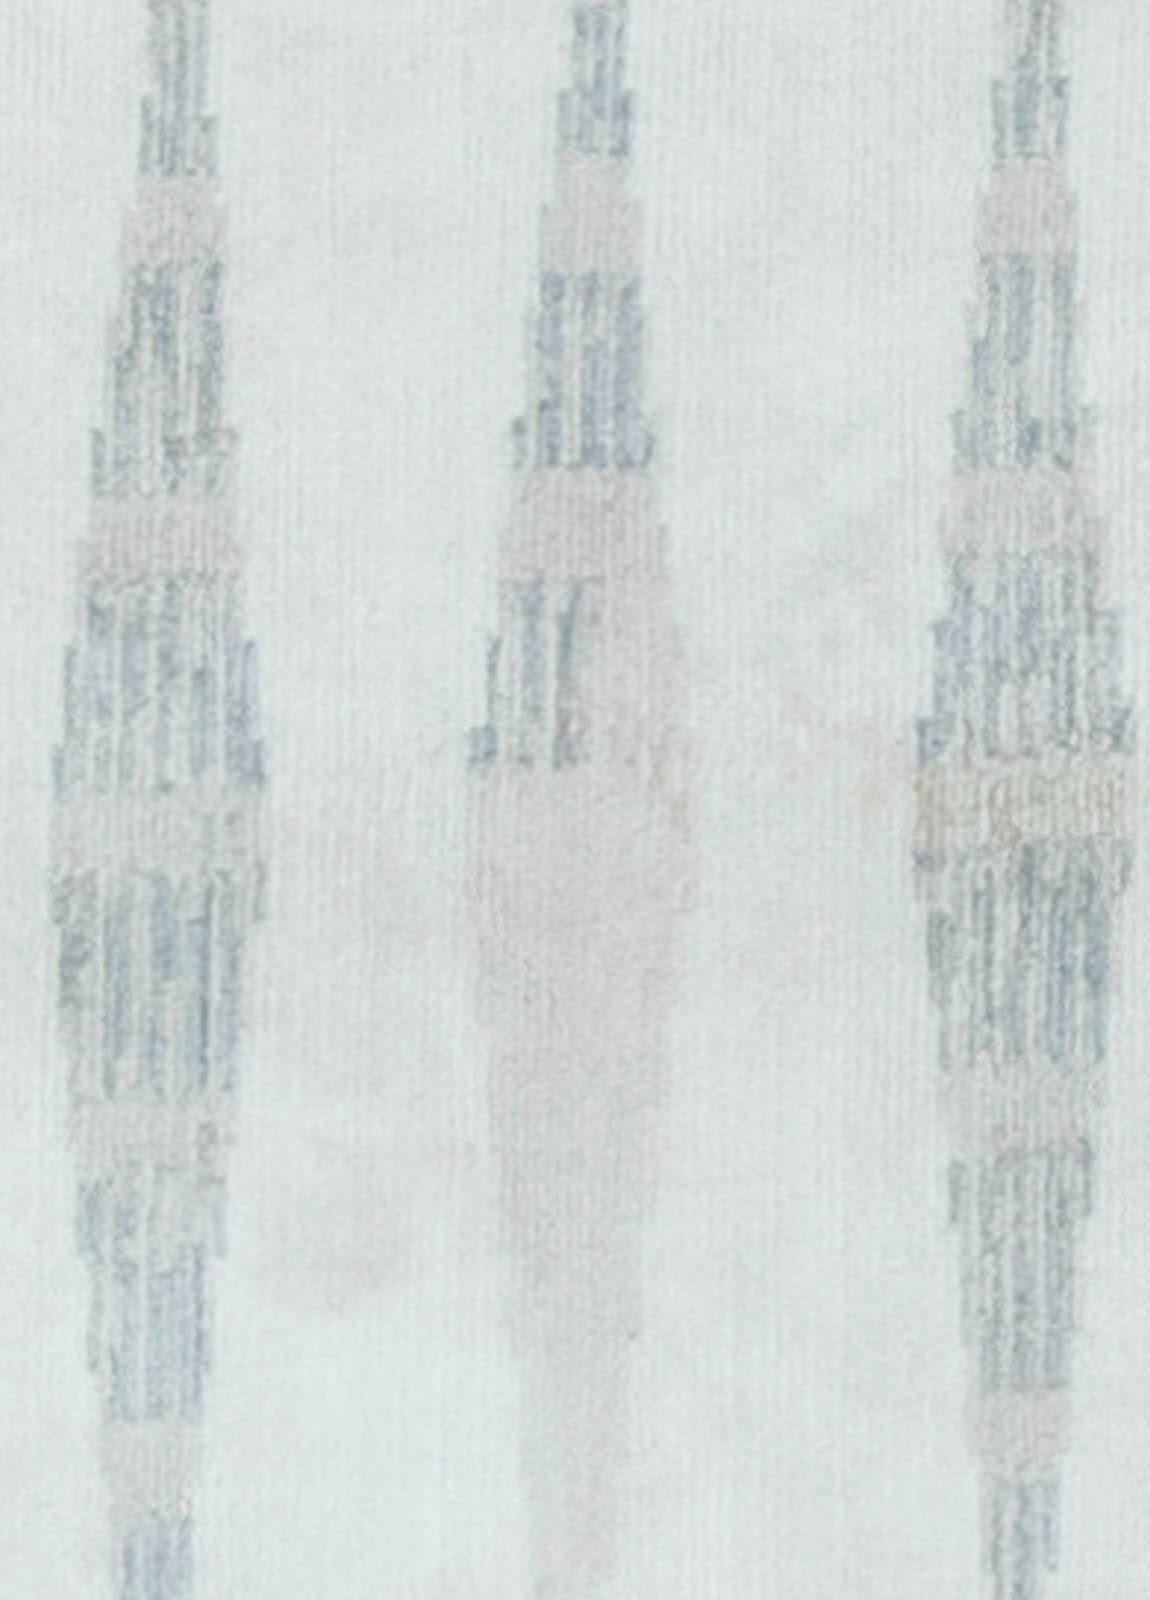 High-quality modern striped wool runner by Doris Leslie Blau.
Size: 3.4